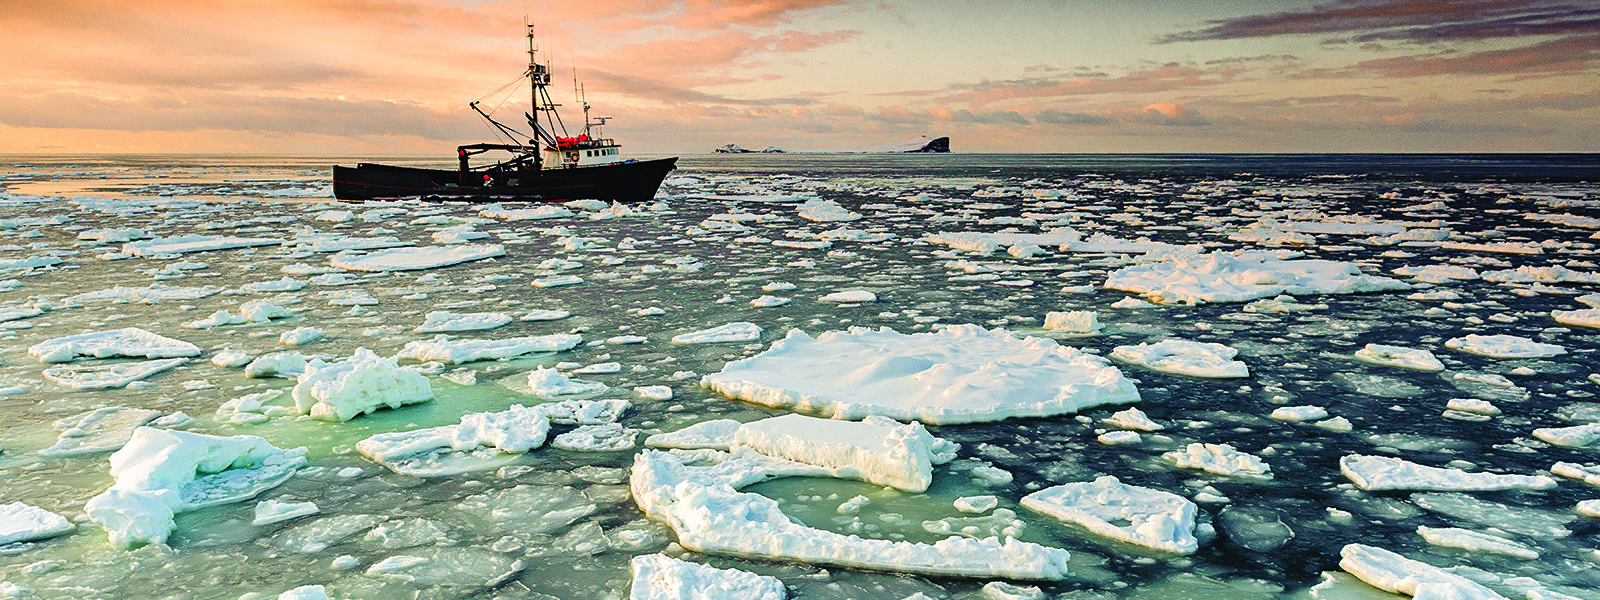 Fishing vessel in the Bering Sea